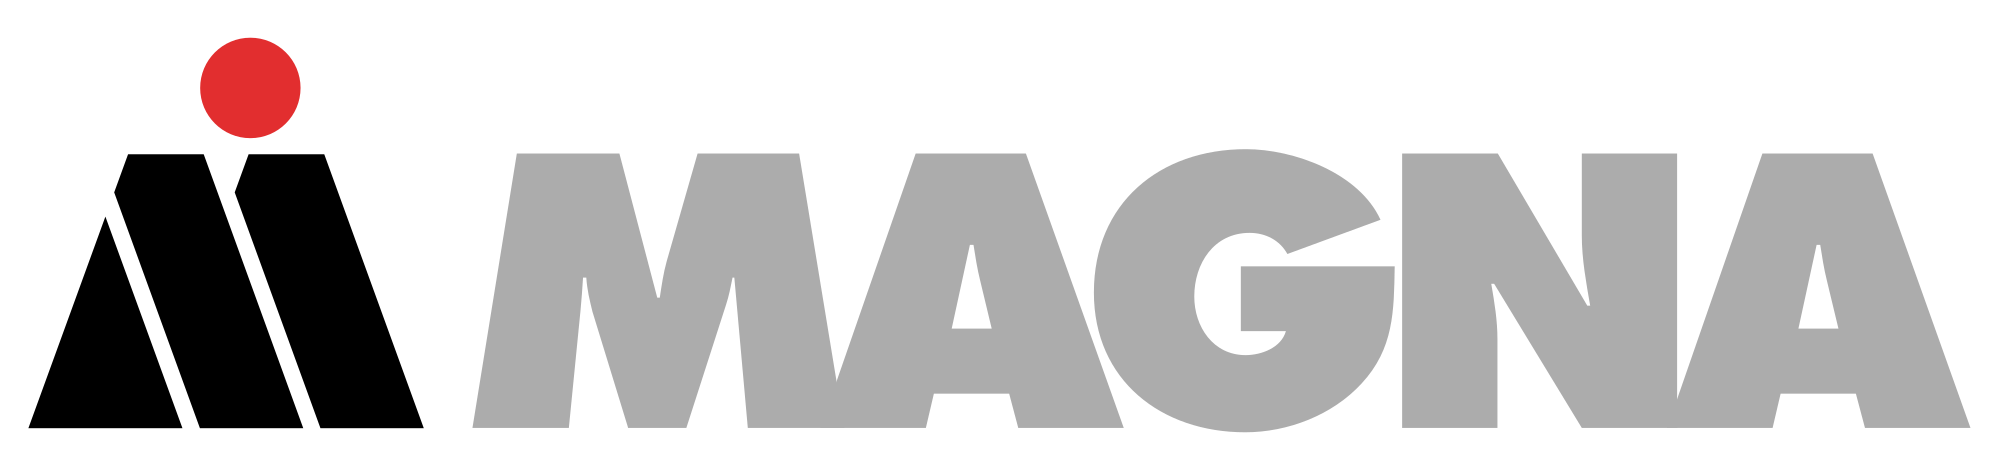 magna-logo